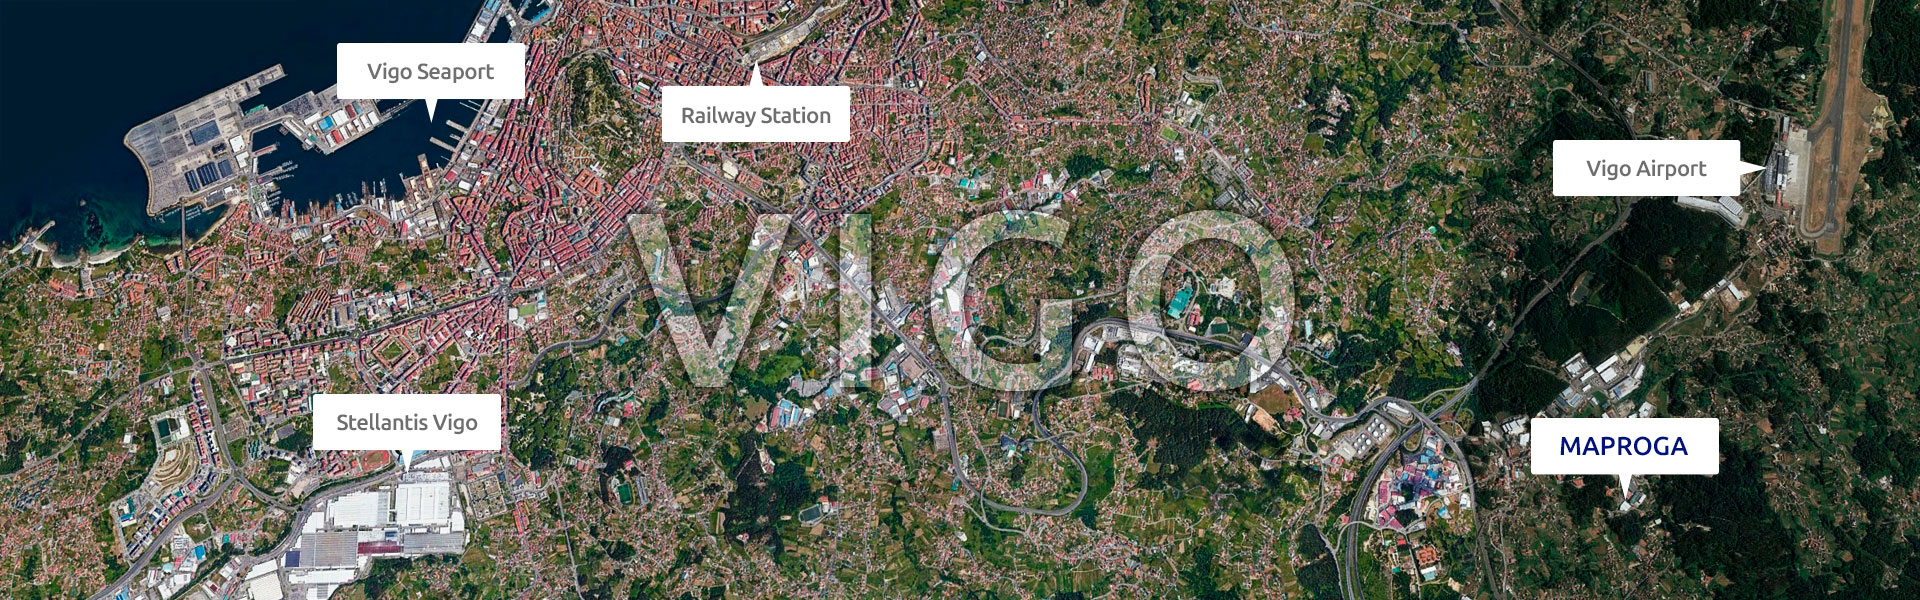 Aerial image showing the location of Maproga in Vigo